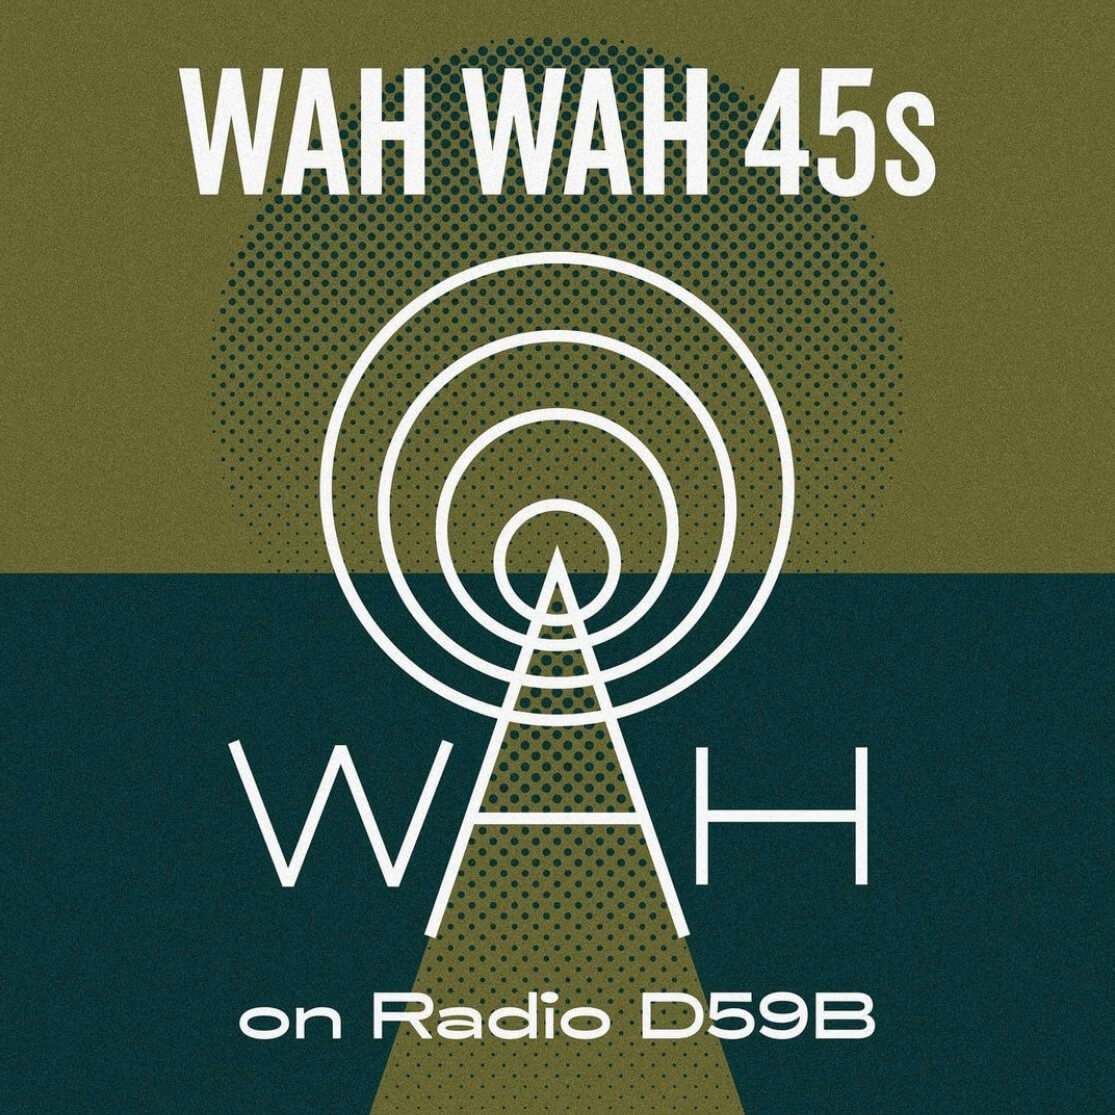 Wah Wah 45s Radio Show